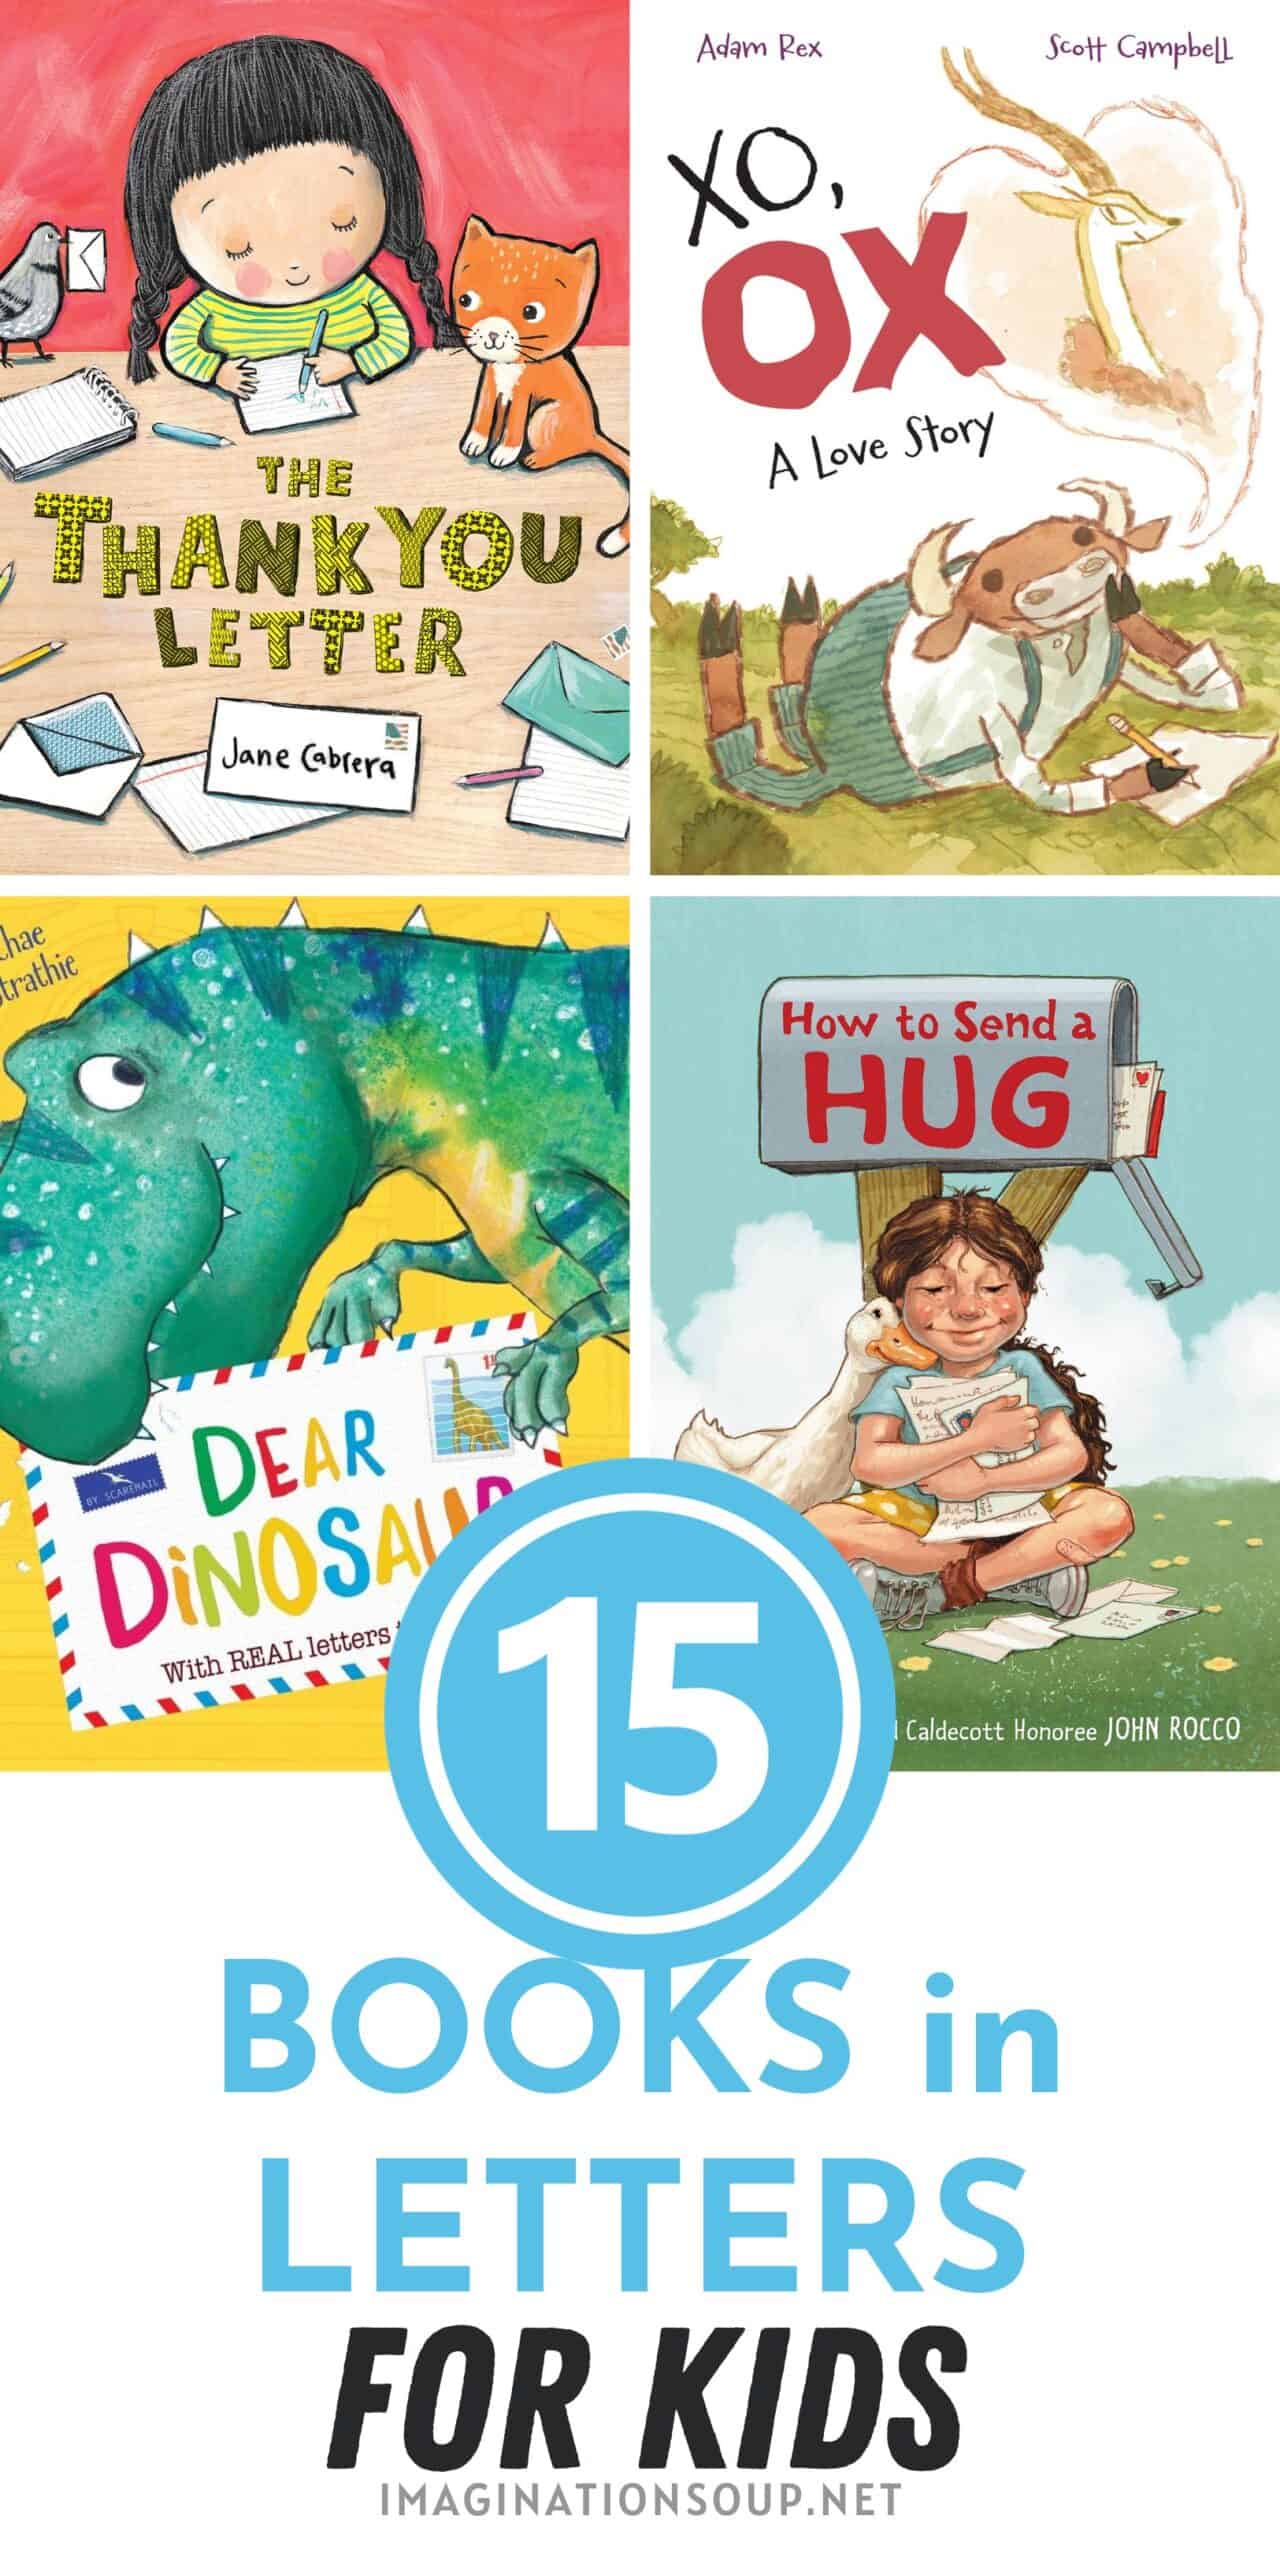 books to teach letter writing for kids (epistolary books)